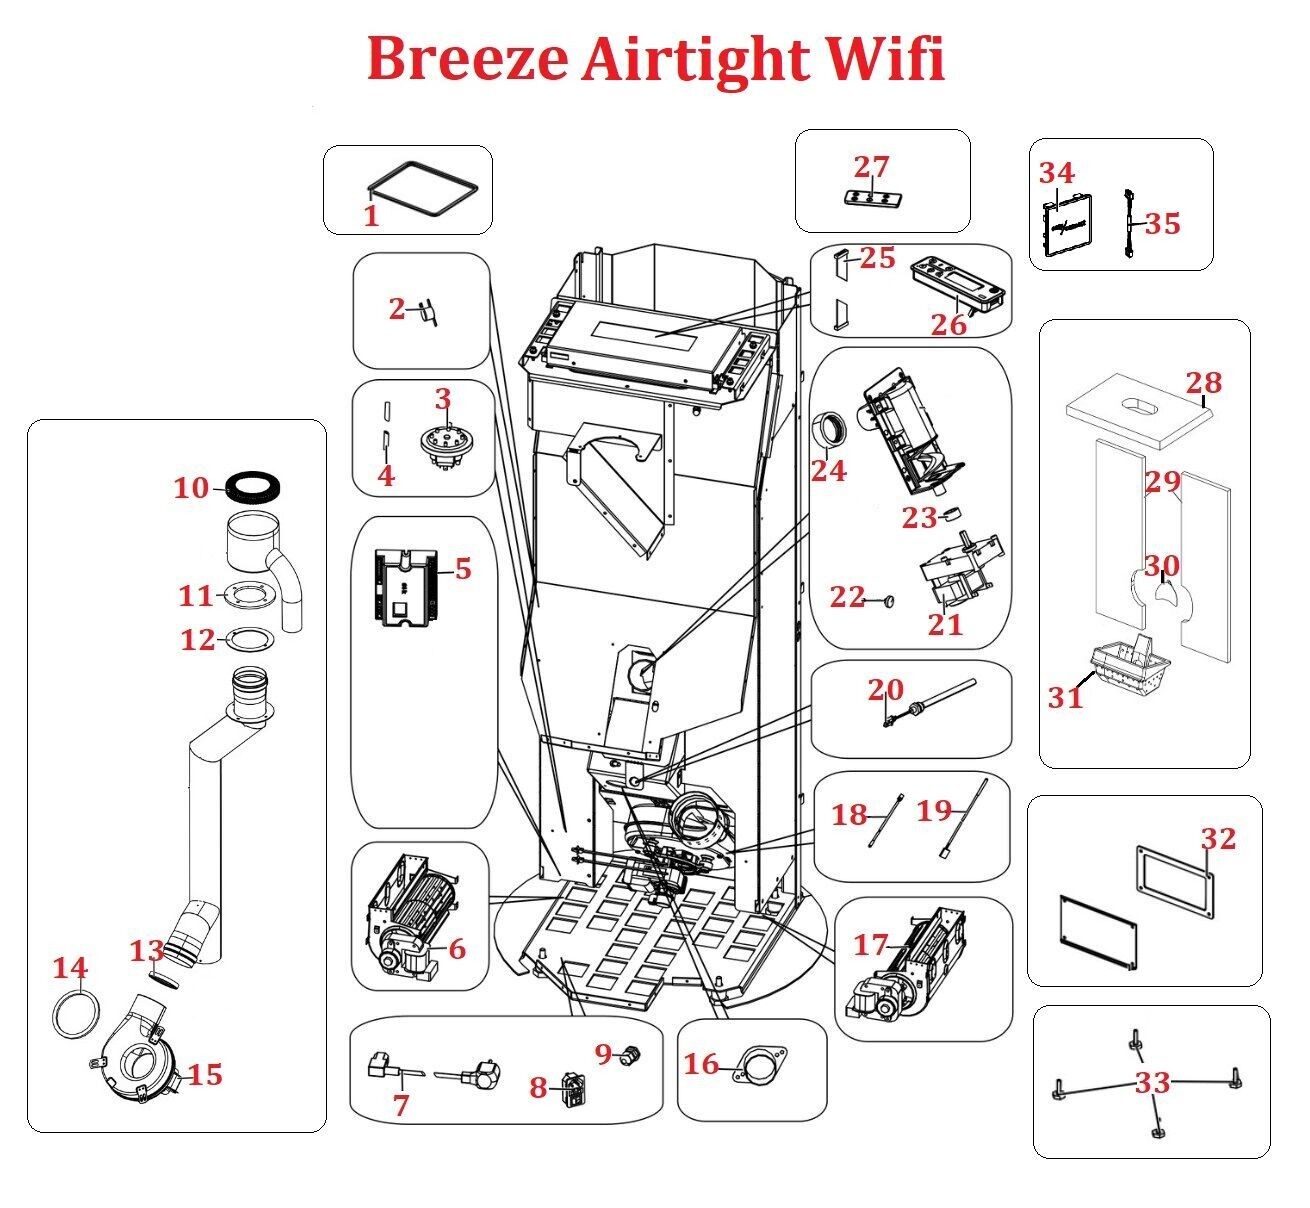 Breeze Airtight Wifi